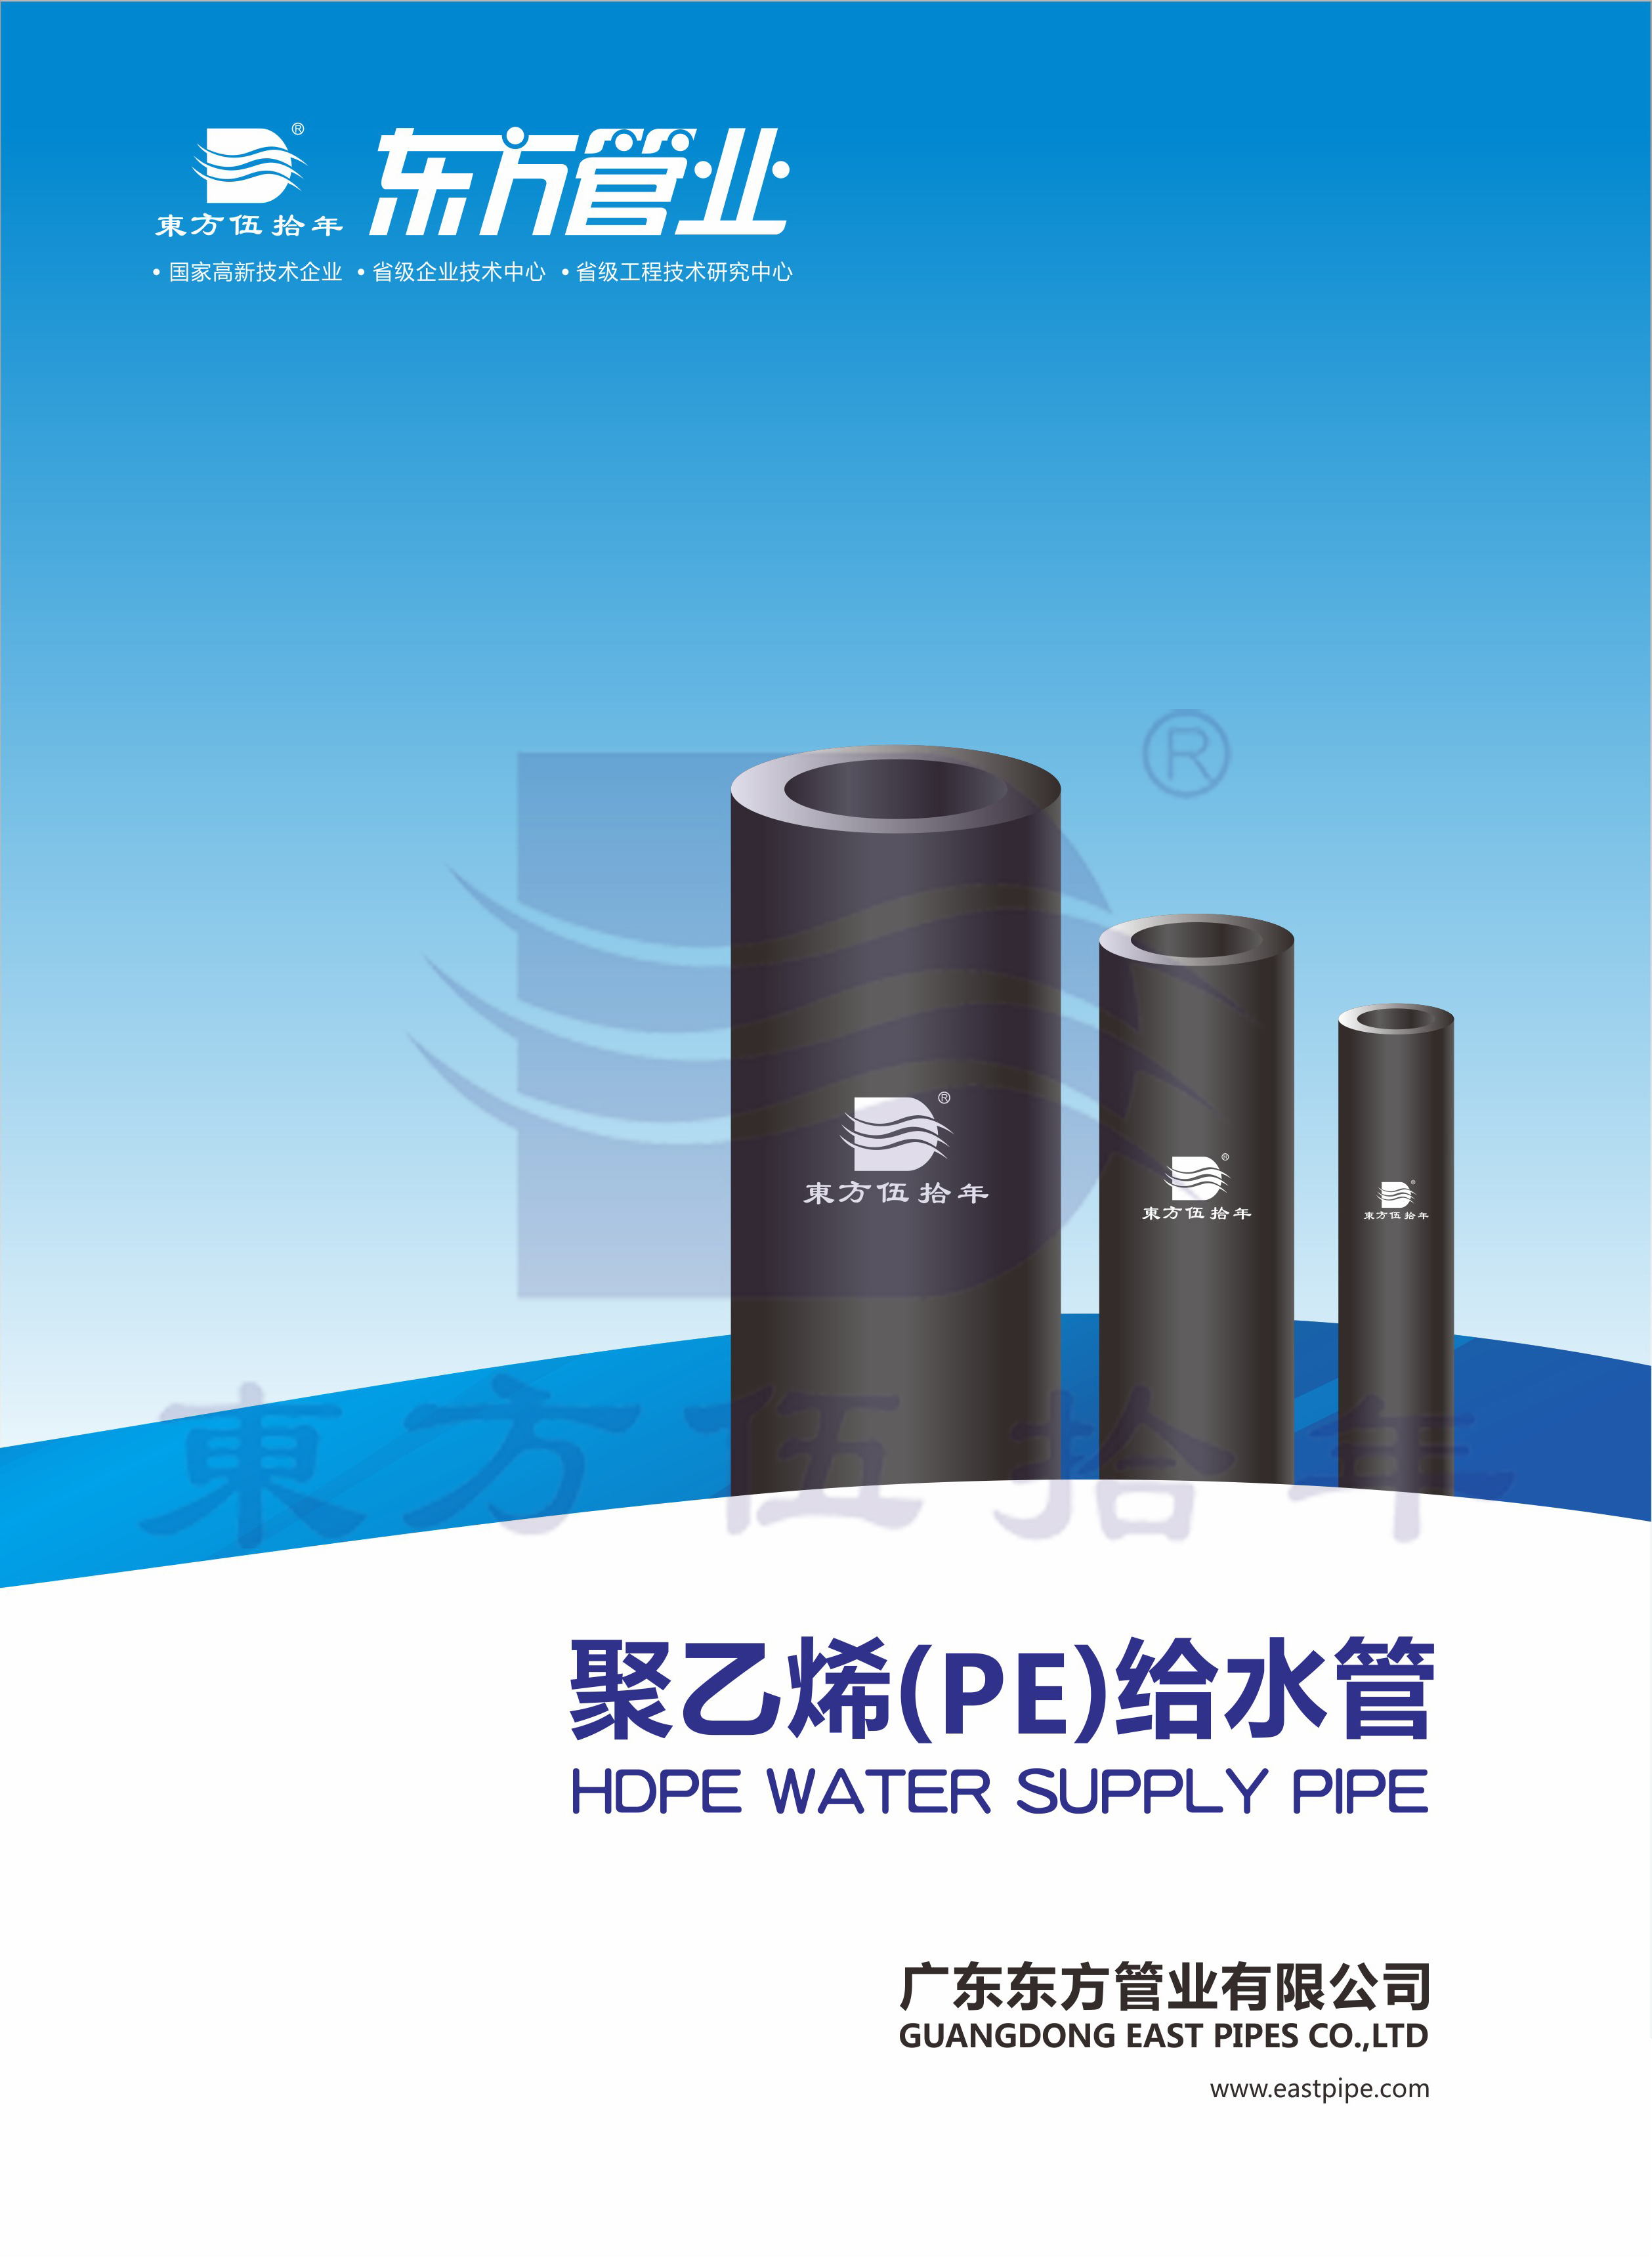 Polyethylene (PE) water supply pipe